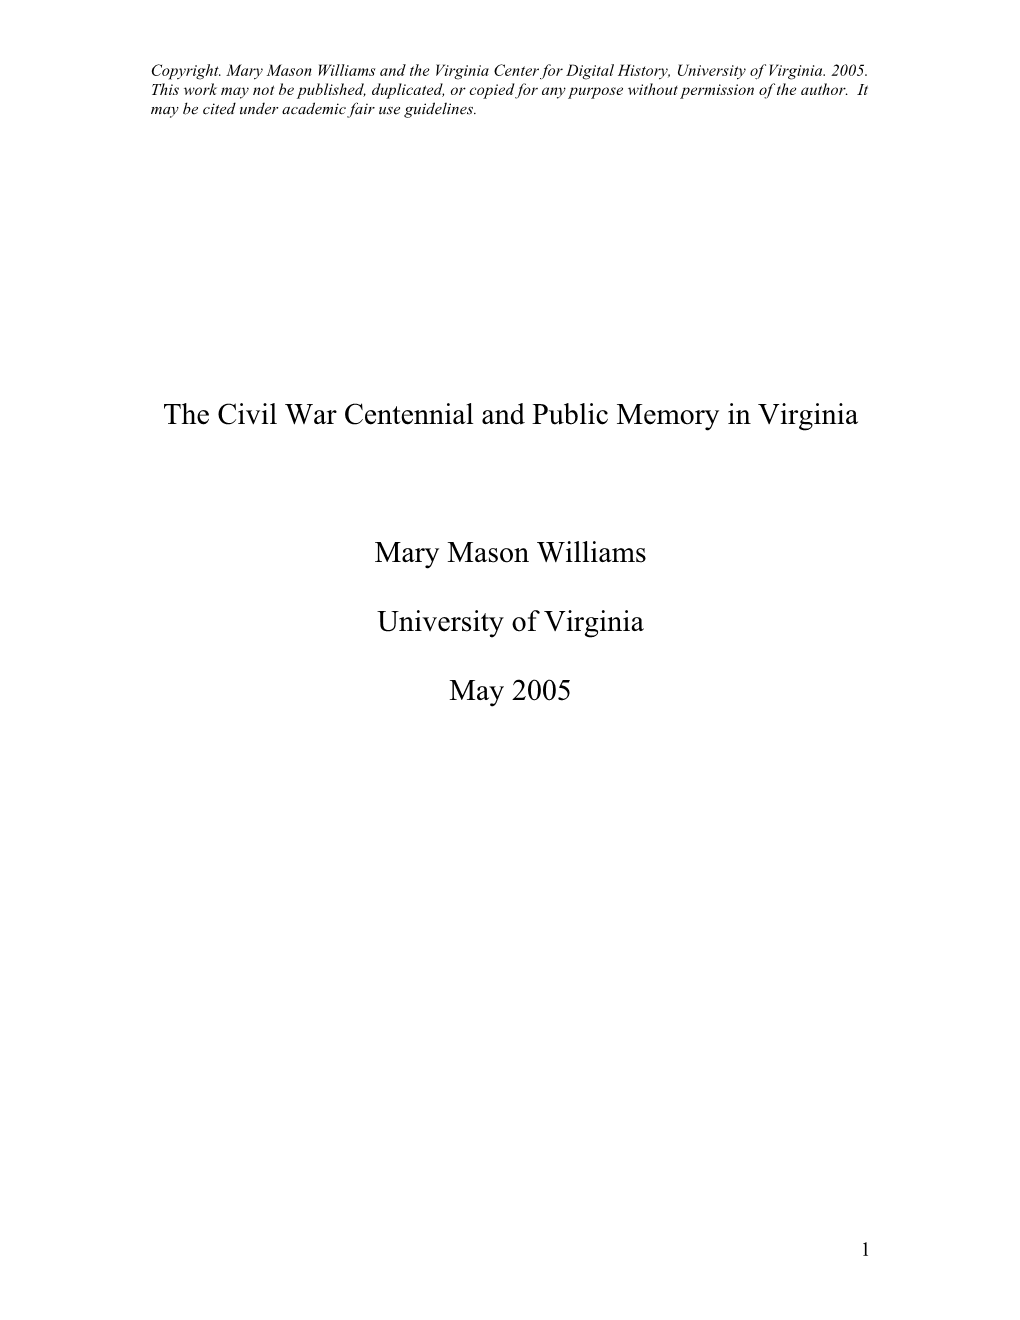 Mary Mason Williams, "The Civil War Centennial and Public Memory In